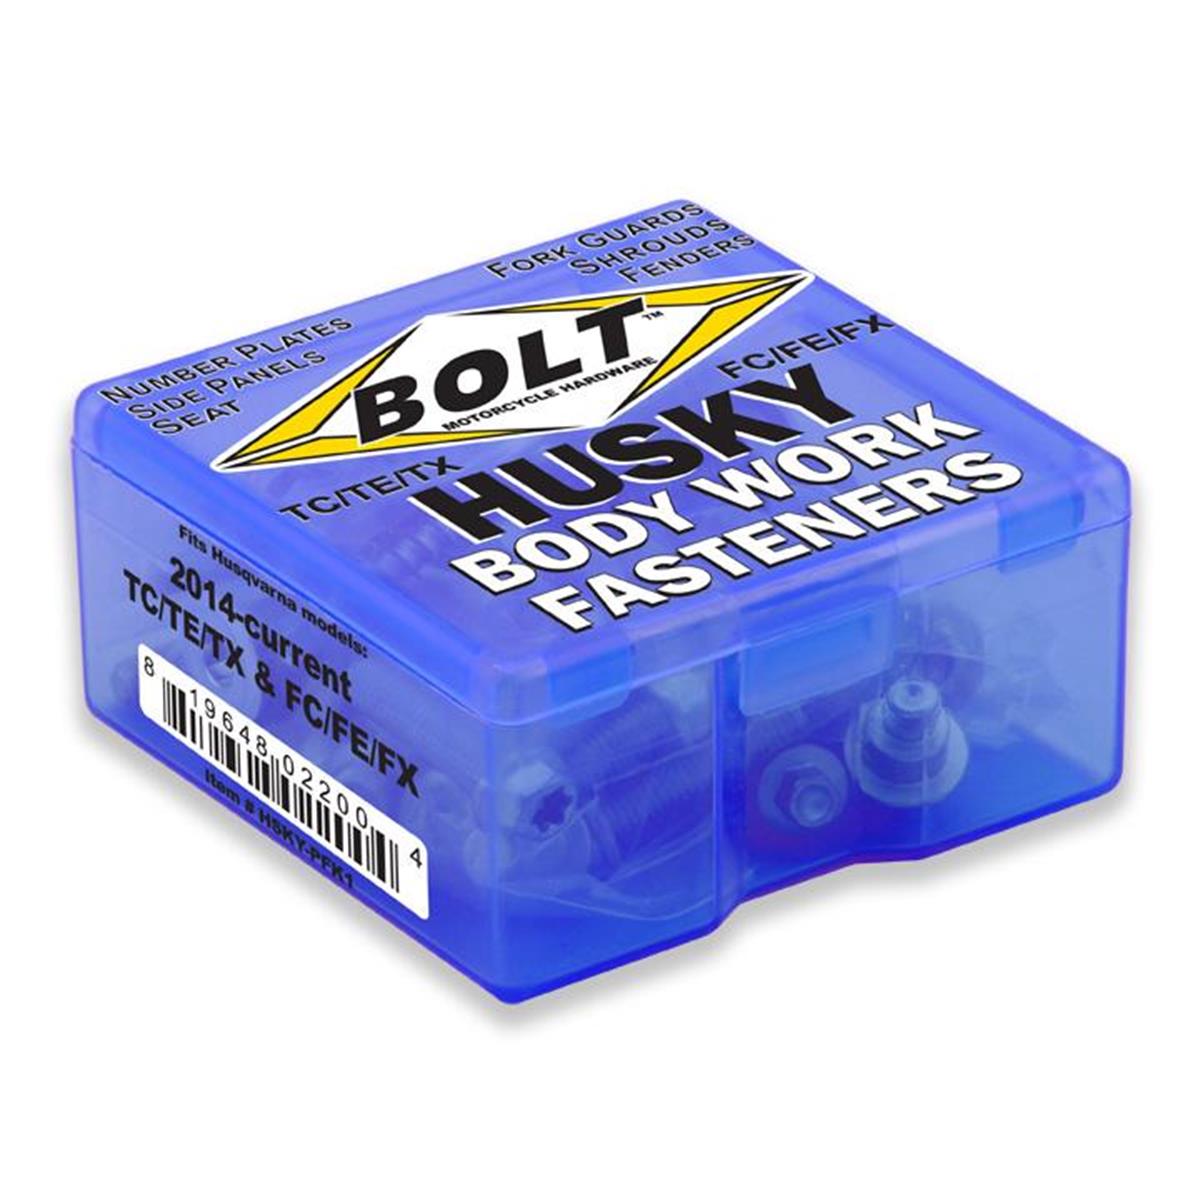 Bolt Kit Viti  for Plastics, Husqvarna 14-